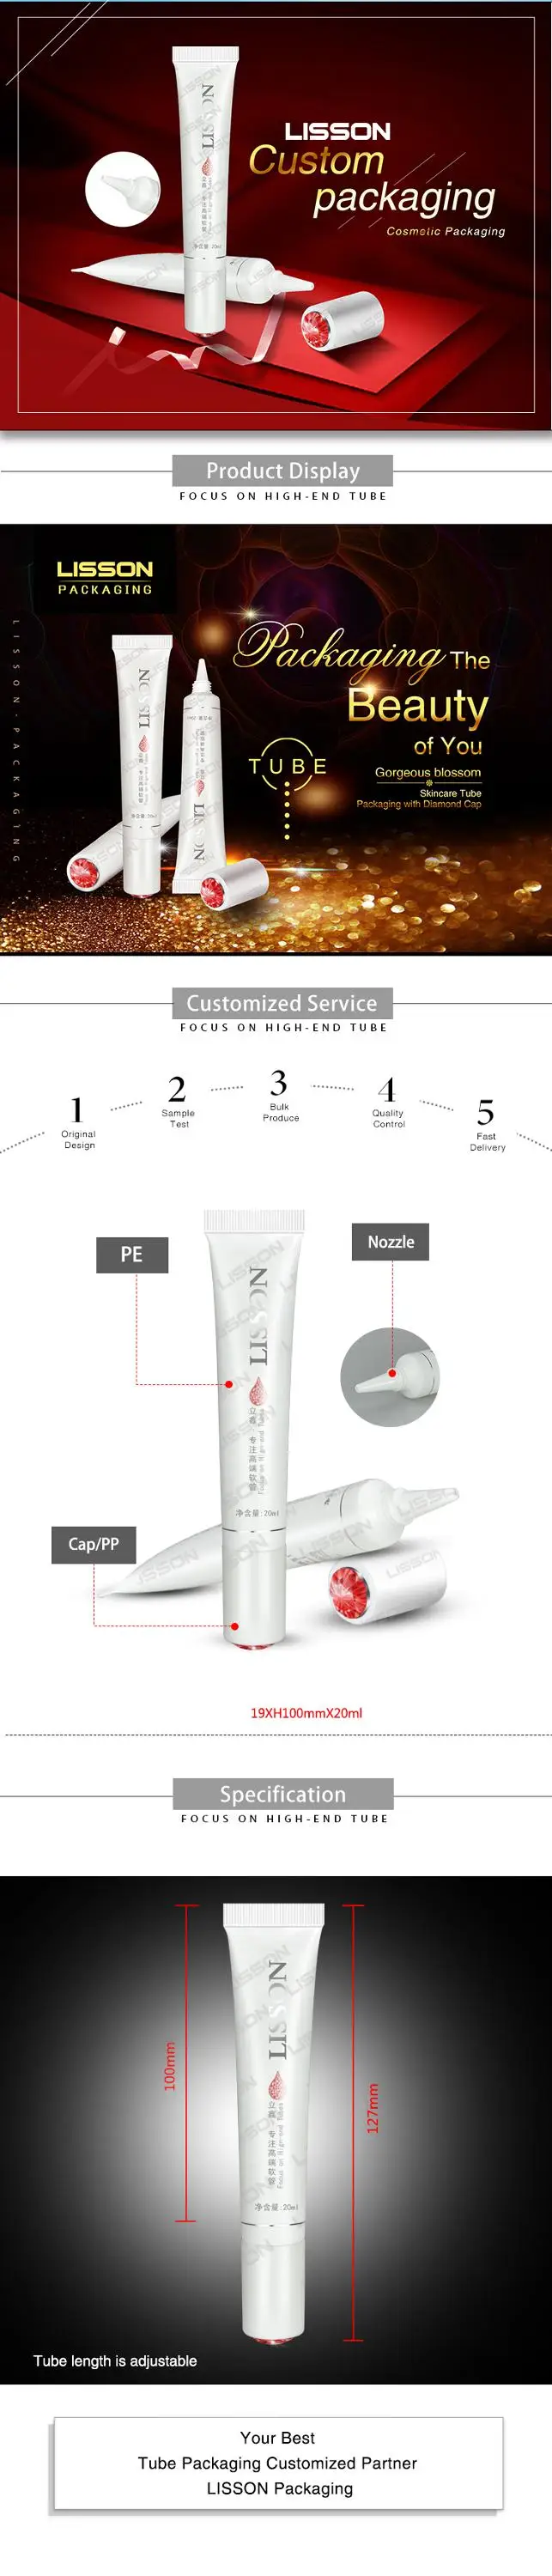 New Style Long Nozzle Eye Cream Tube 5ml - 30ml PE Tube Cosmetic Packaging with Diamond-shaped Head